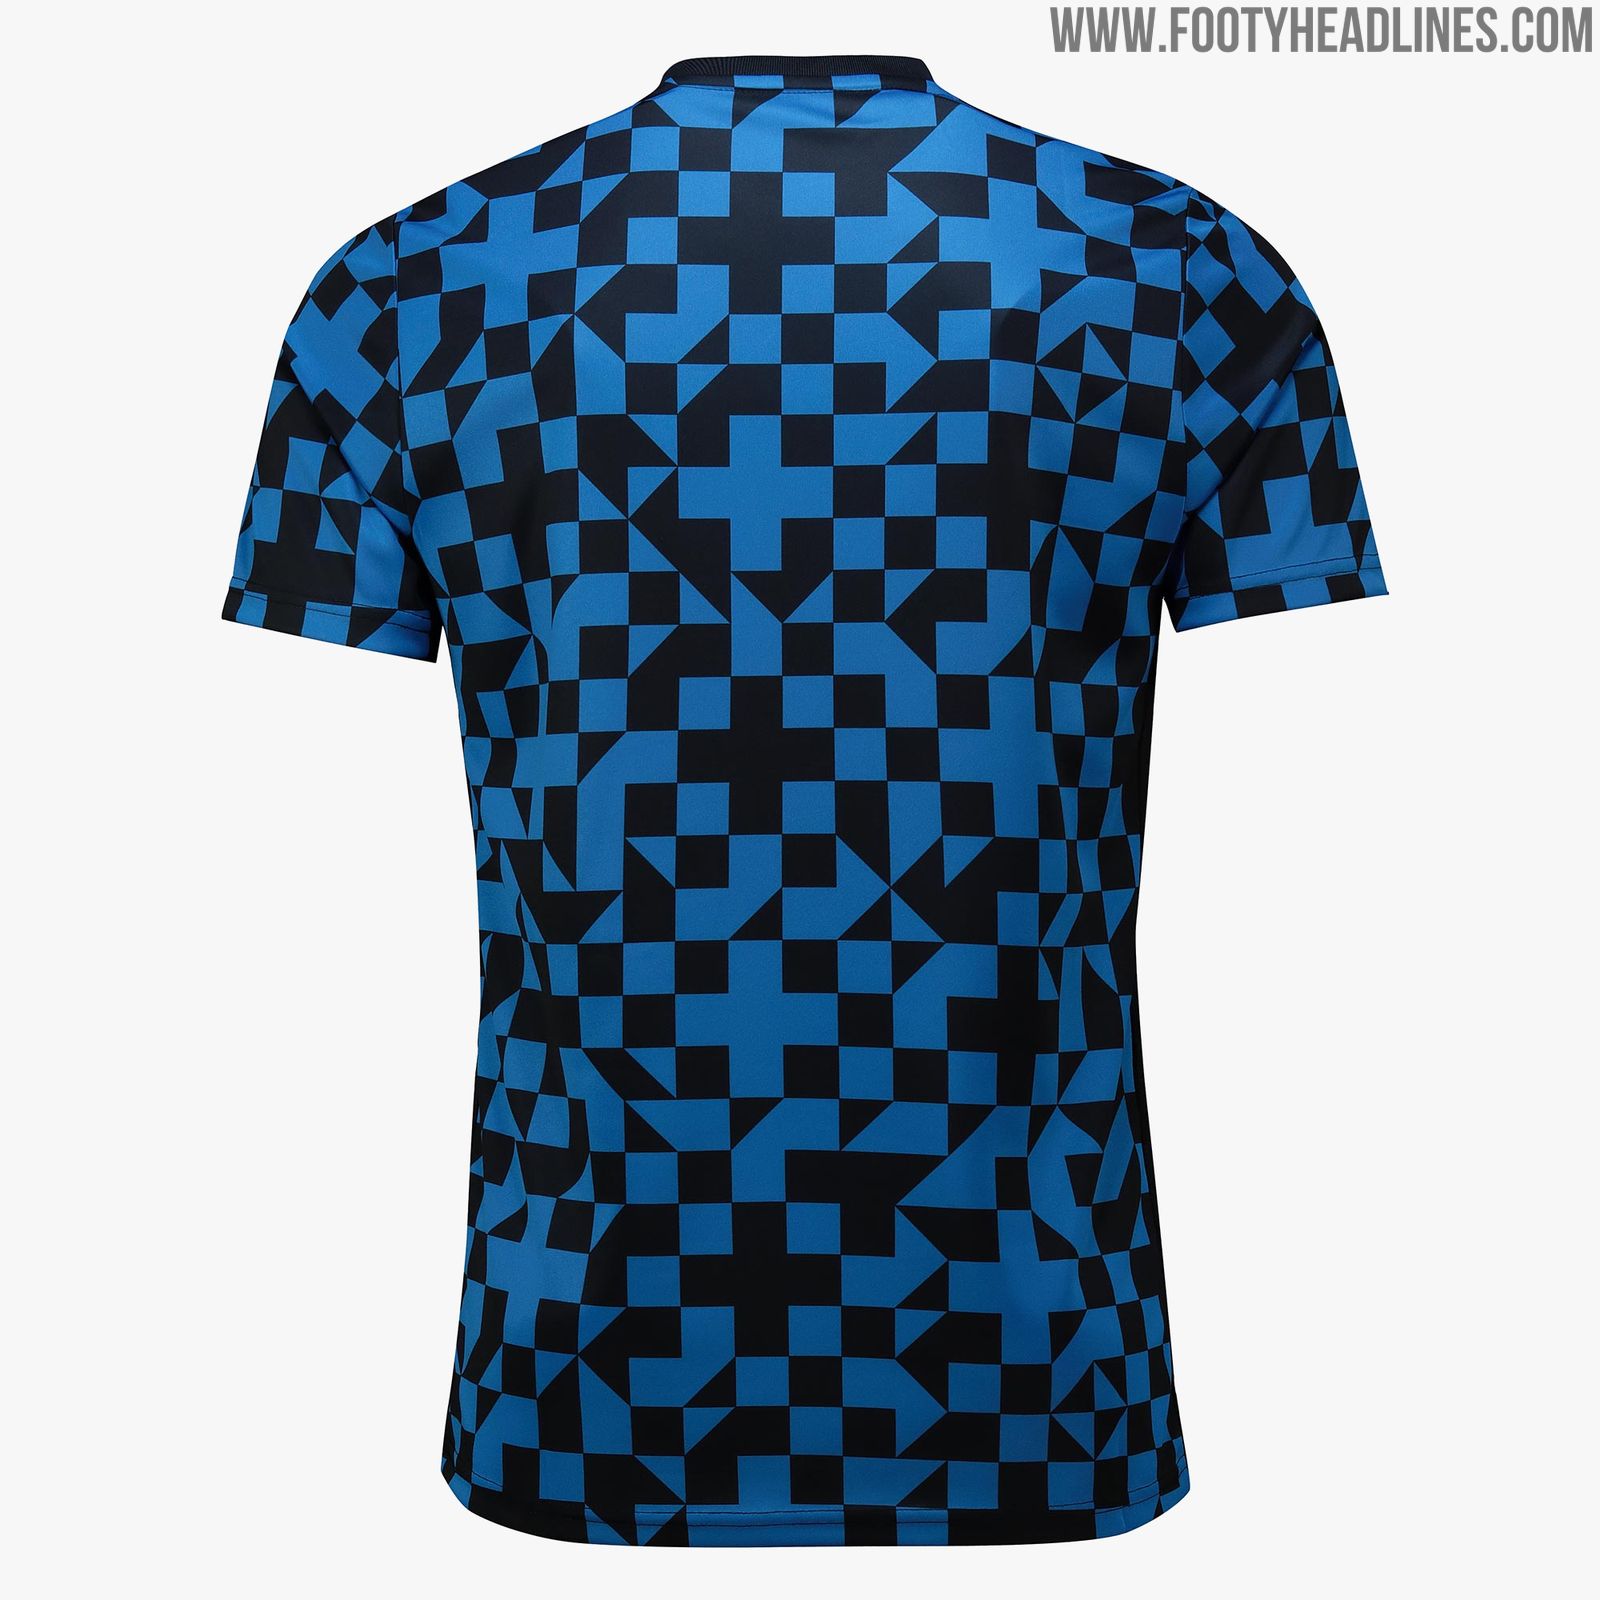 Stunning Nike Inter Milan 19-20 Pre-Match Shirt Released - Footy Headlines